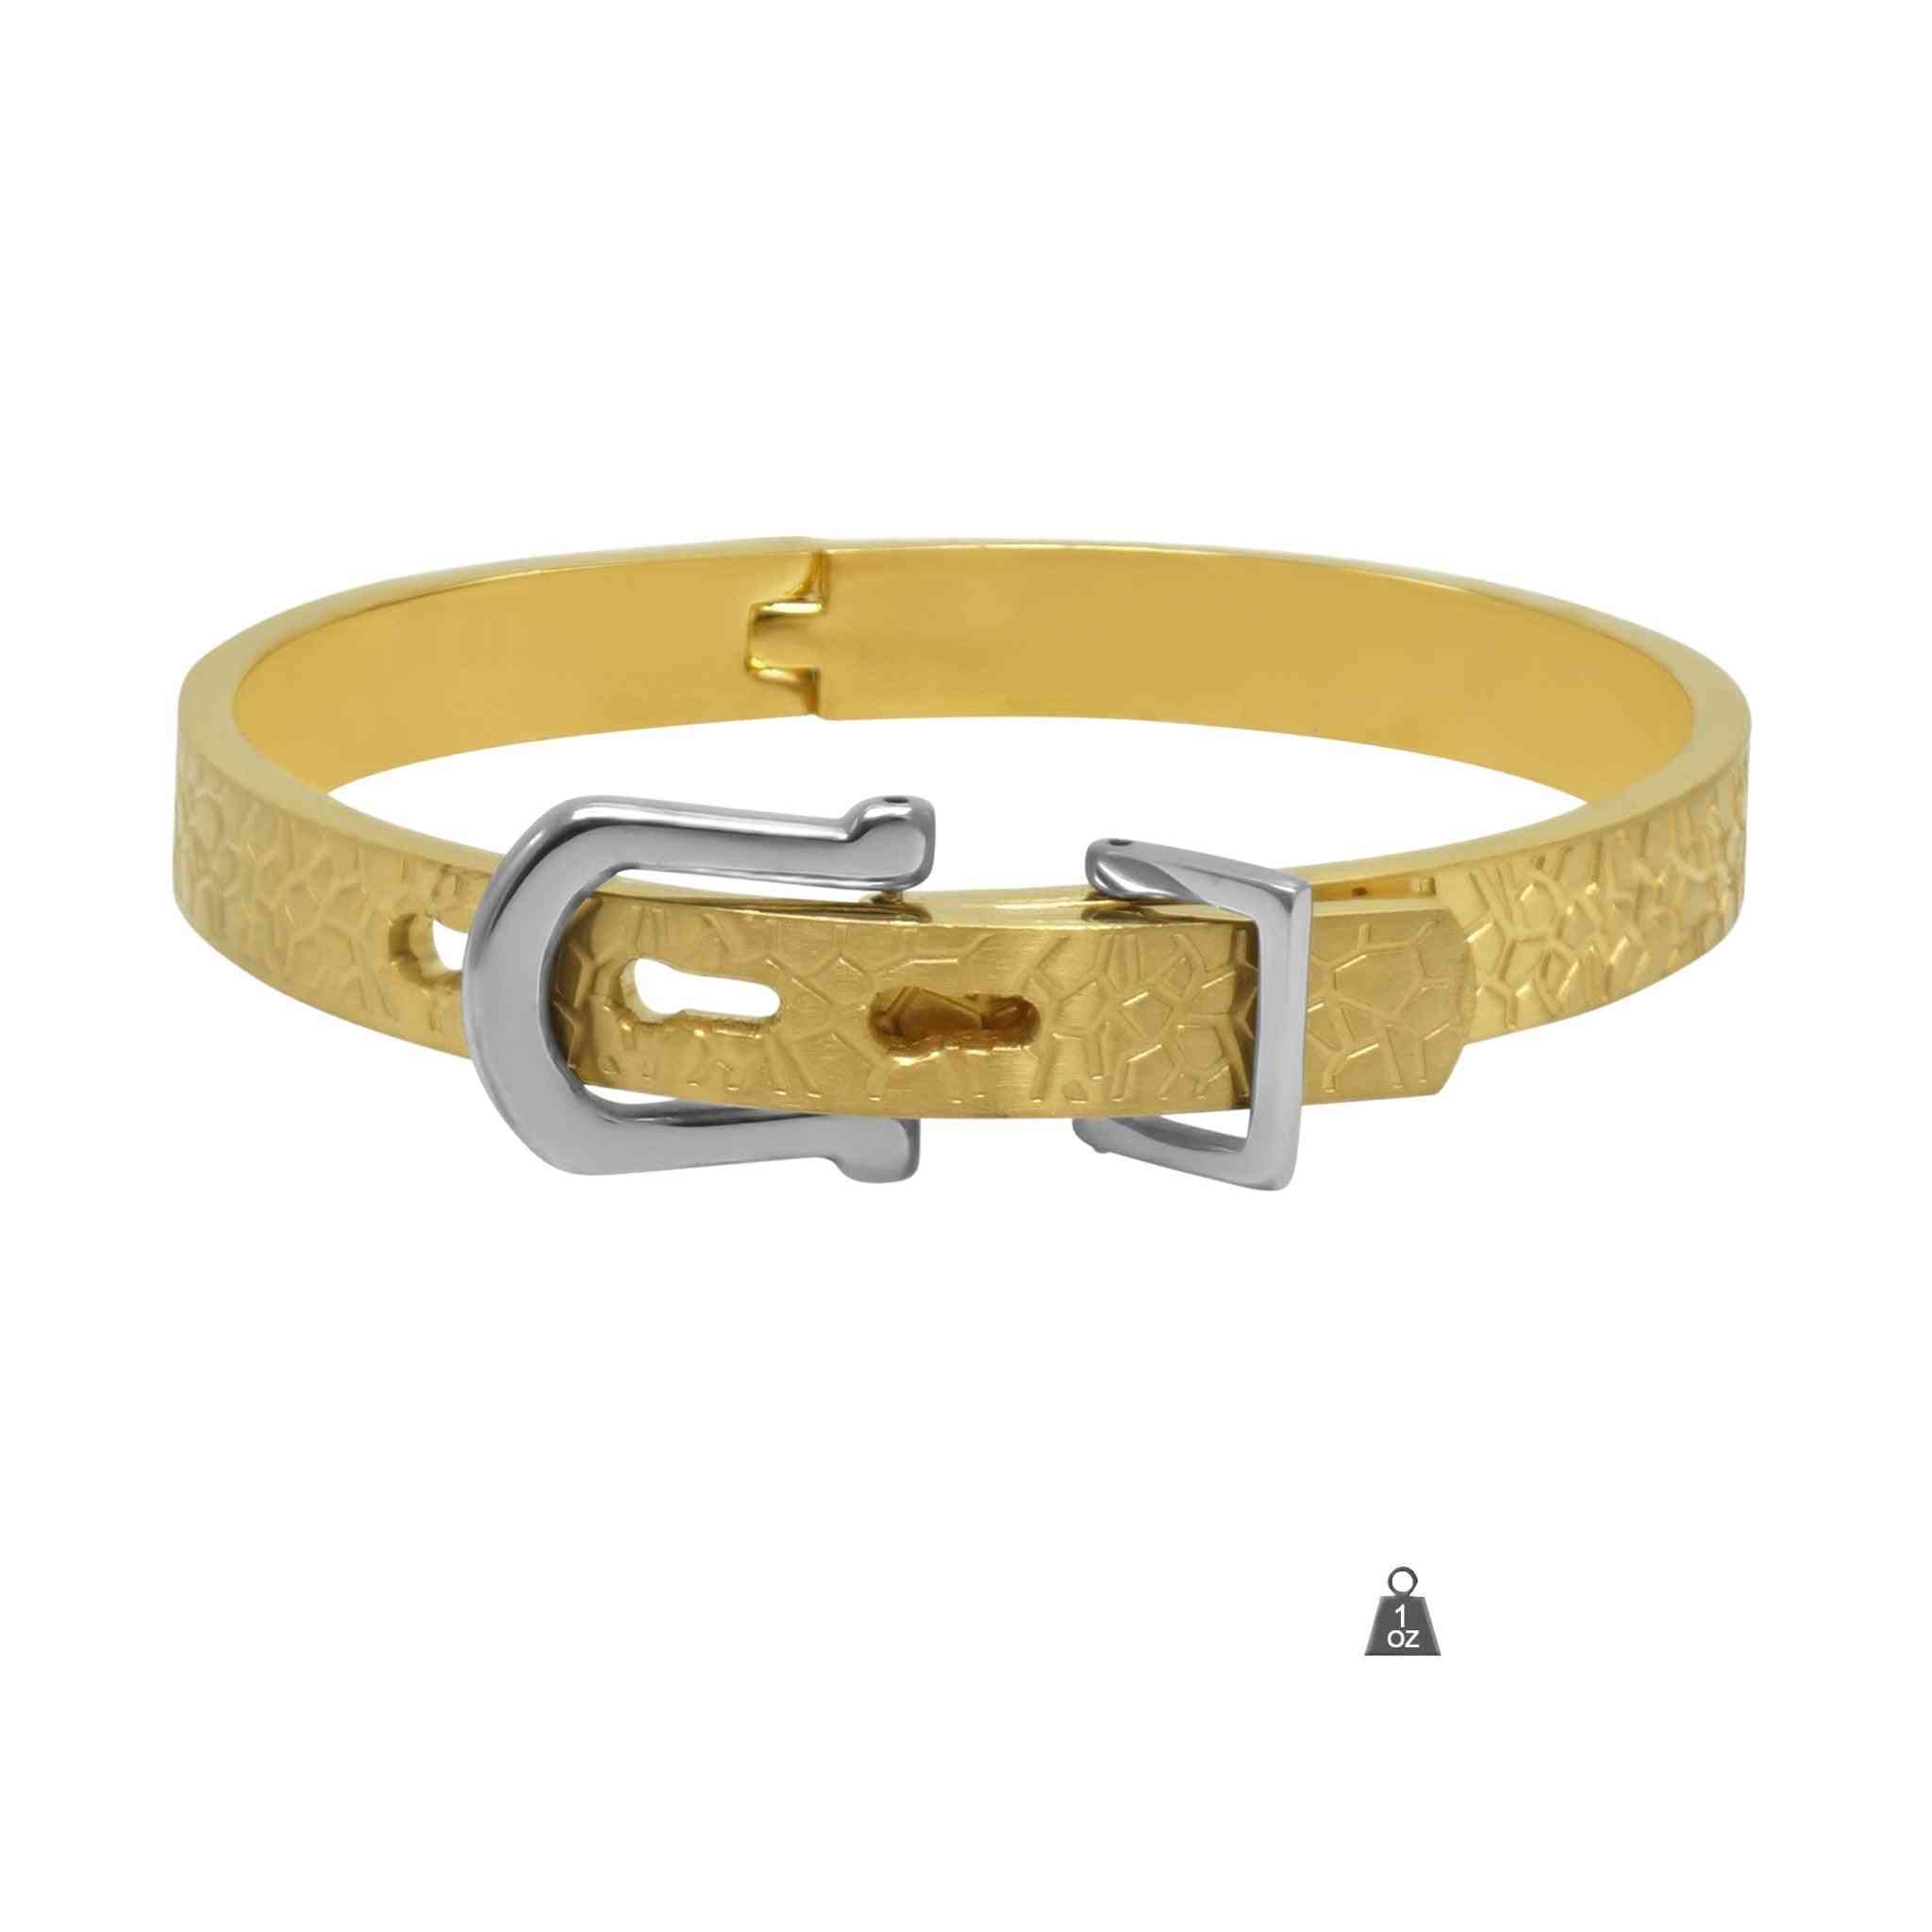 Bracelet en forme de ceinture en acier inoxydable